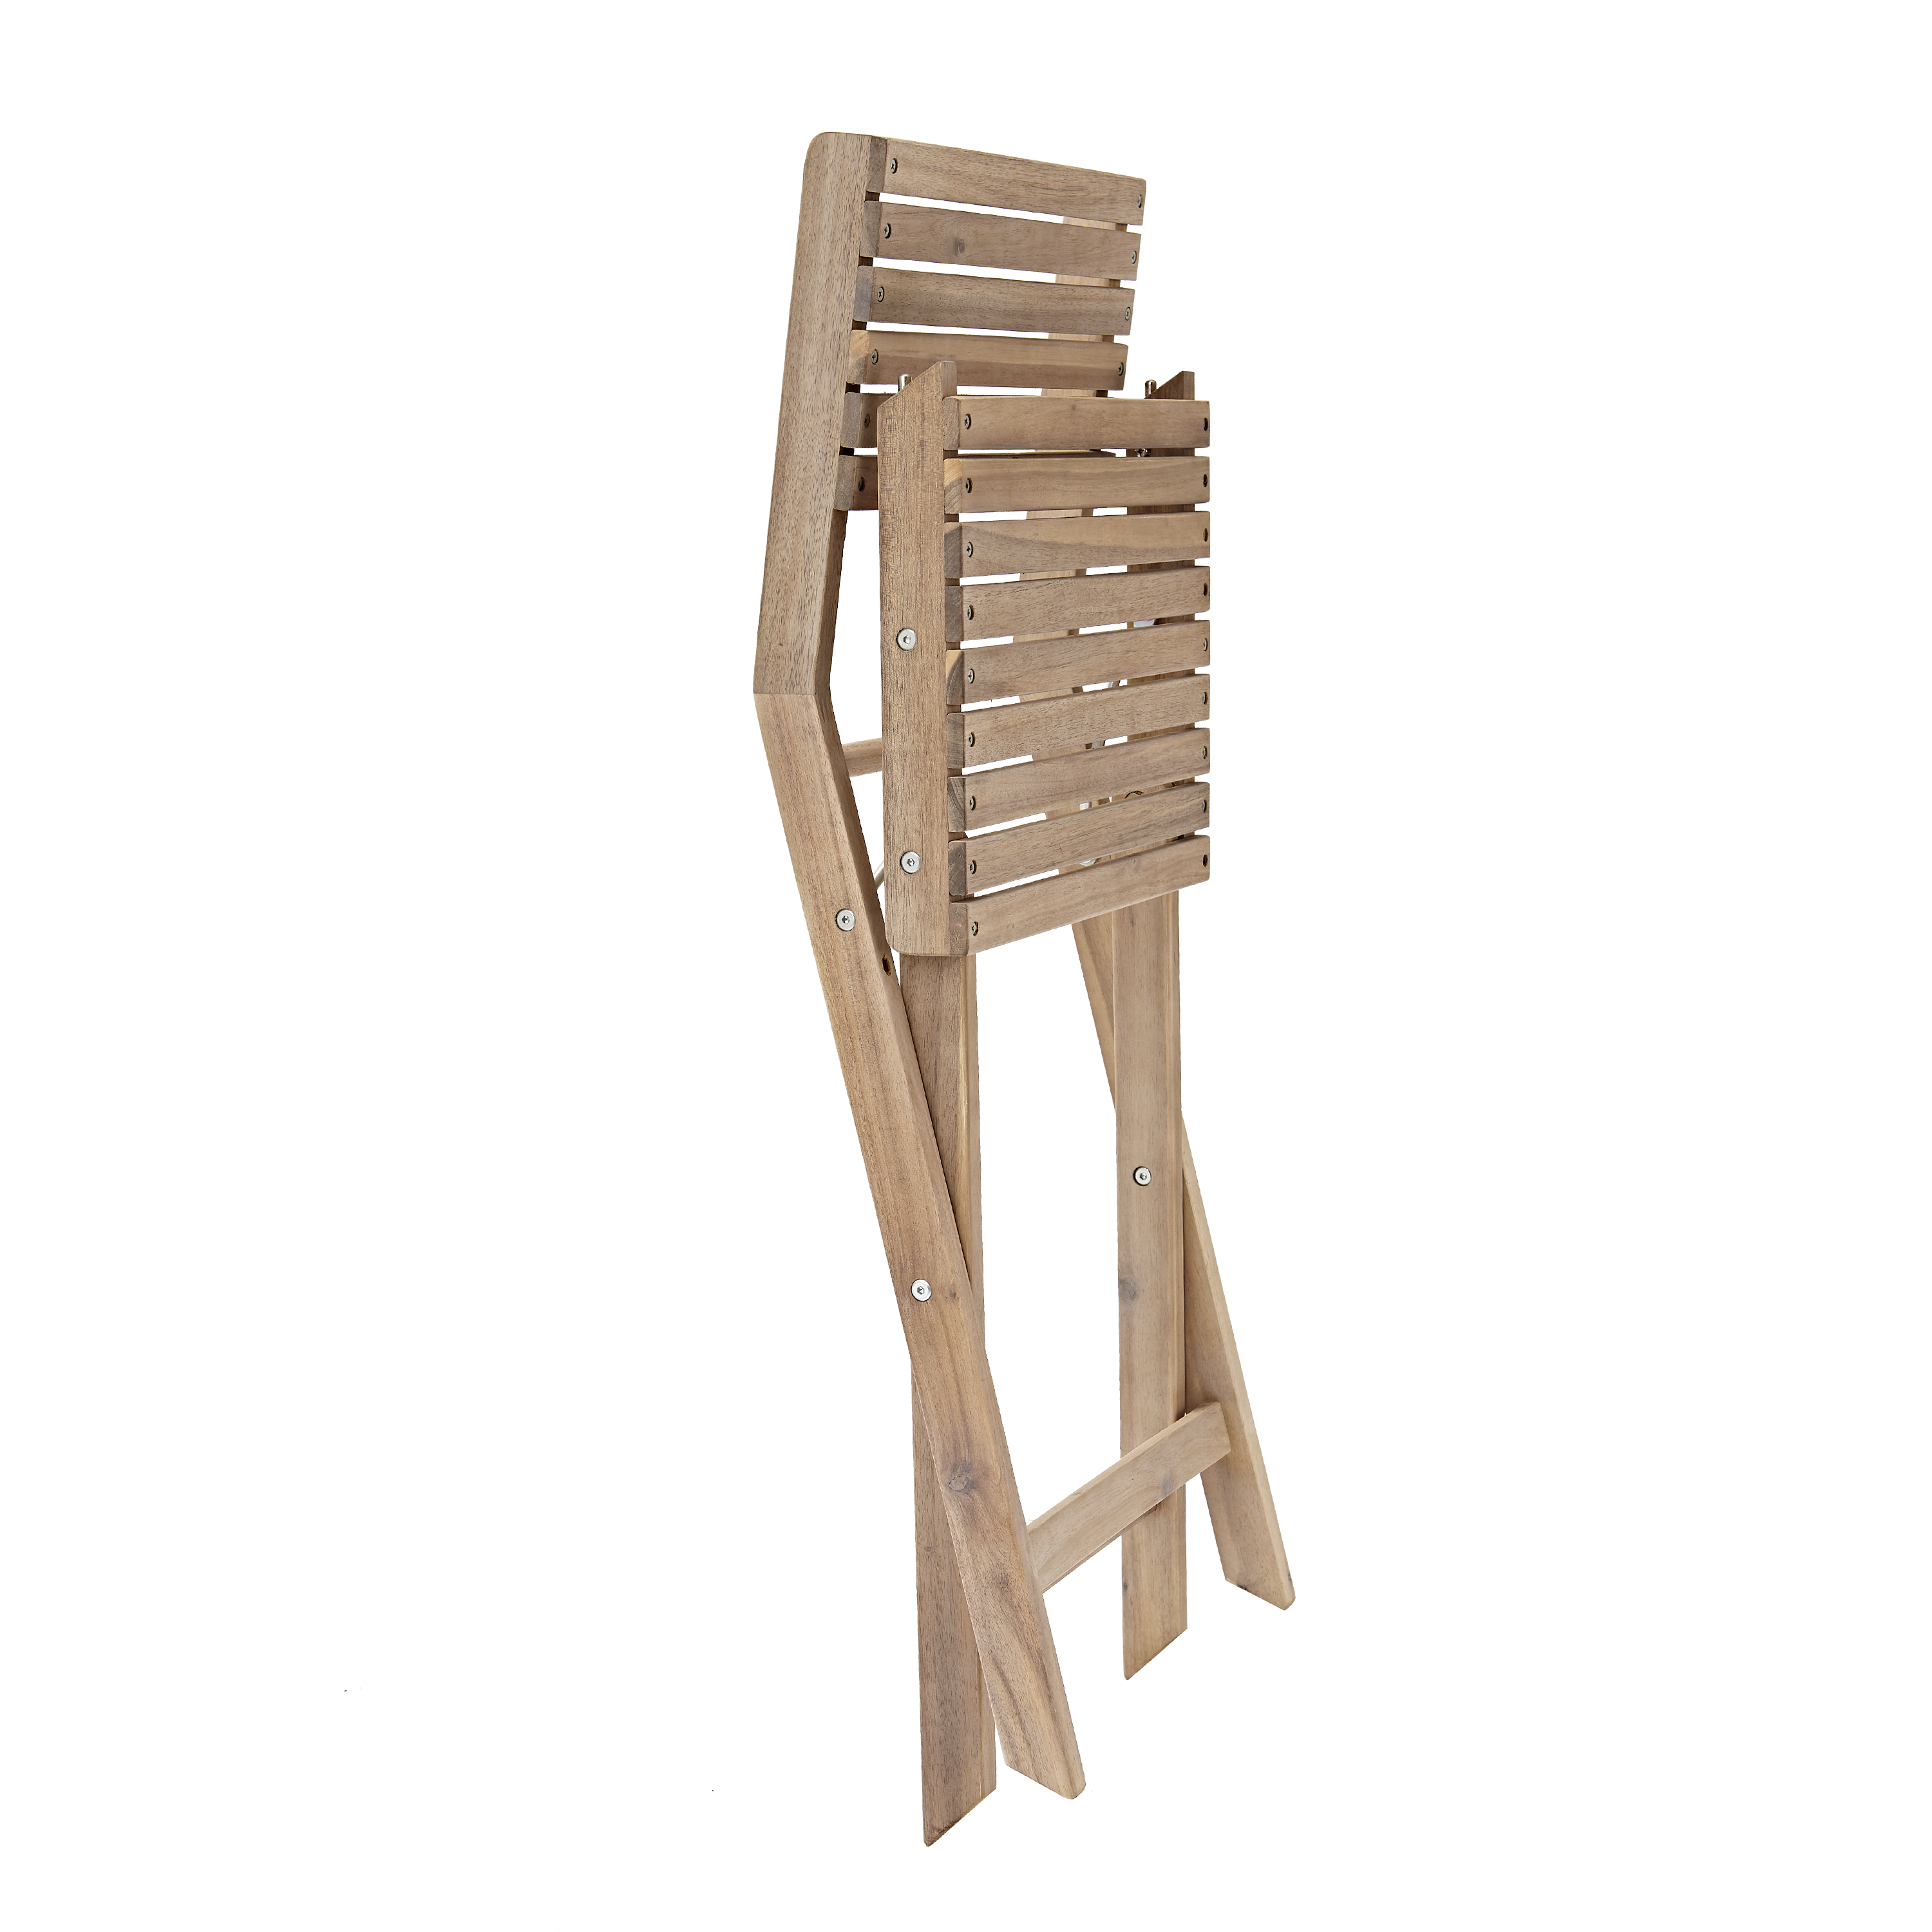 Pack 2 sillas de exterior de madera naterial solís